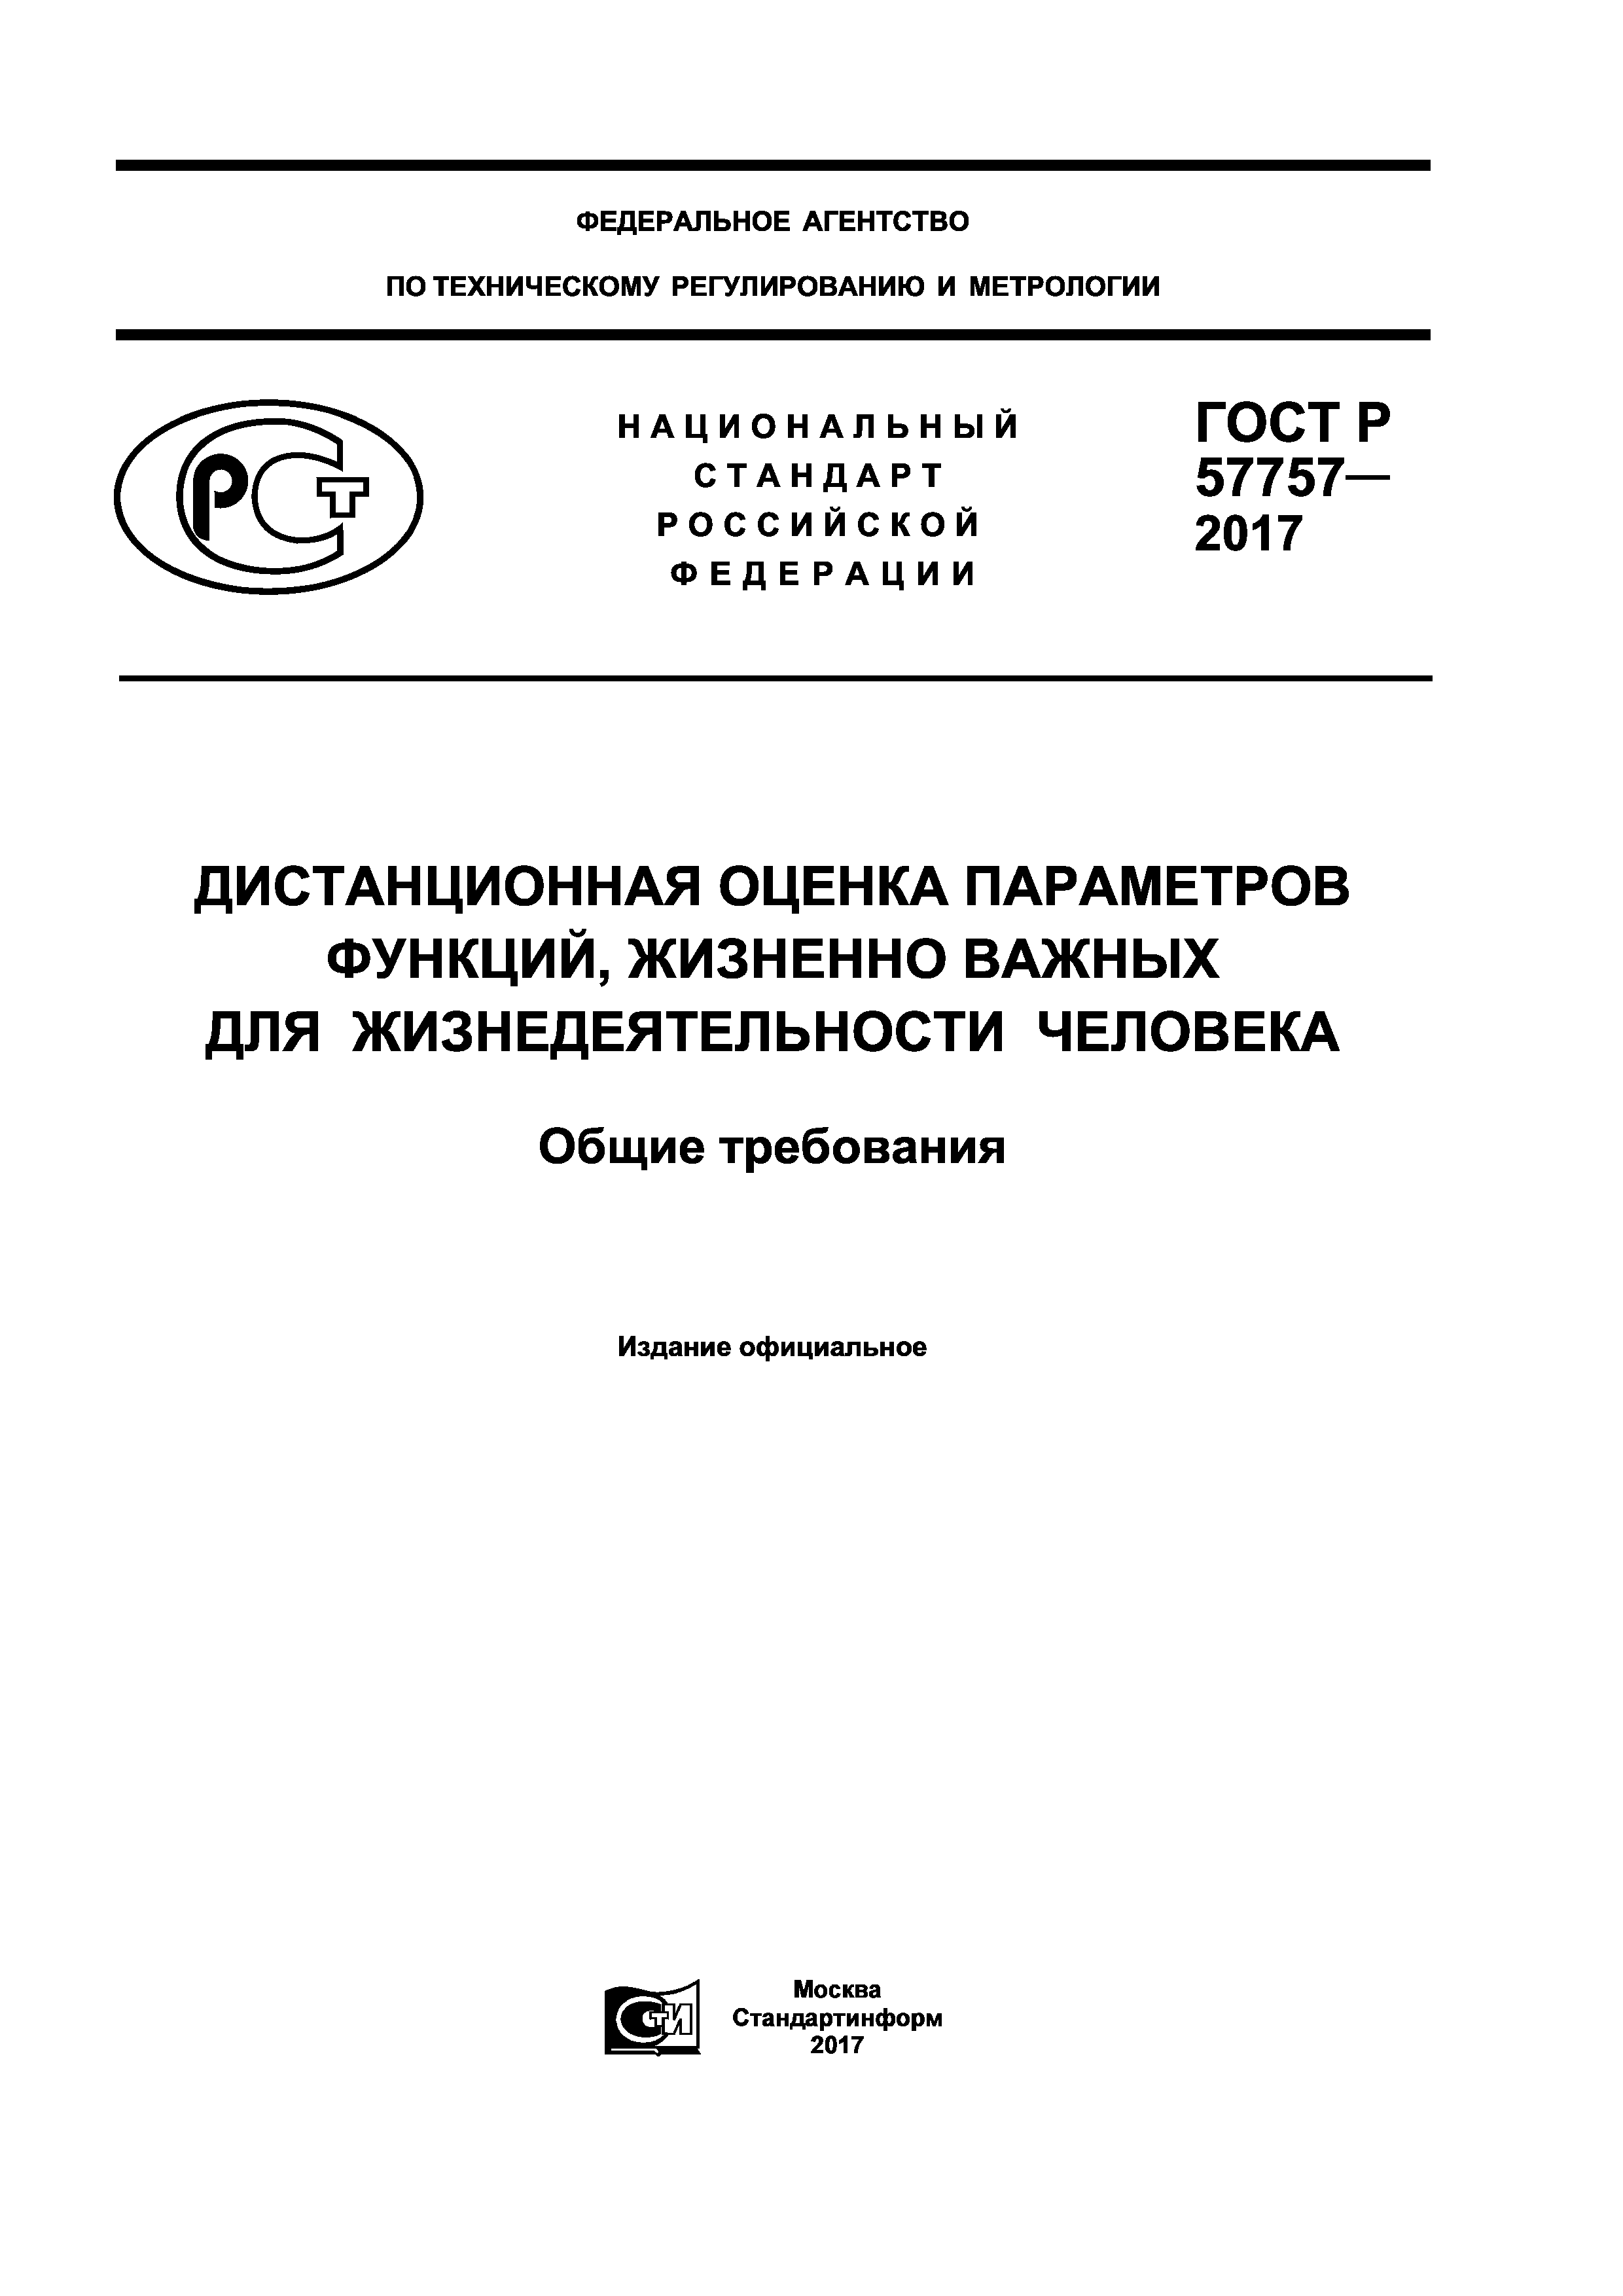 ГОСТ Р 57757-2017